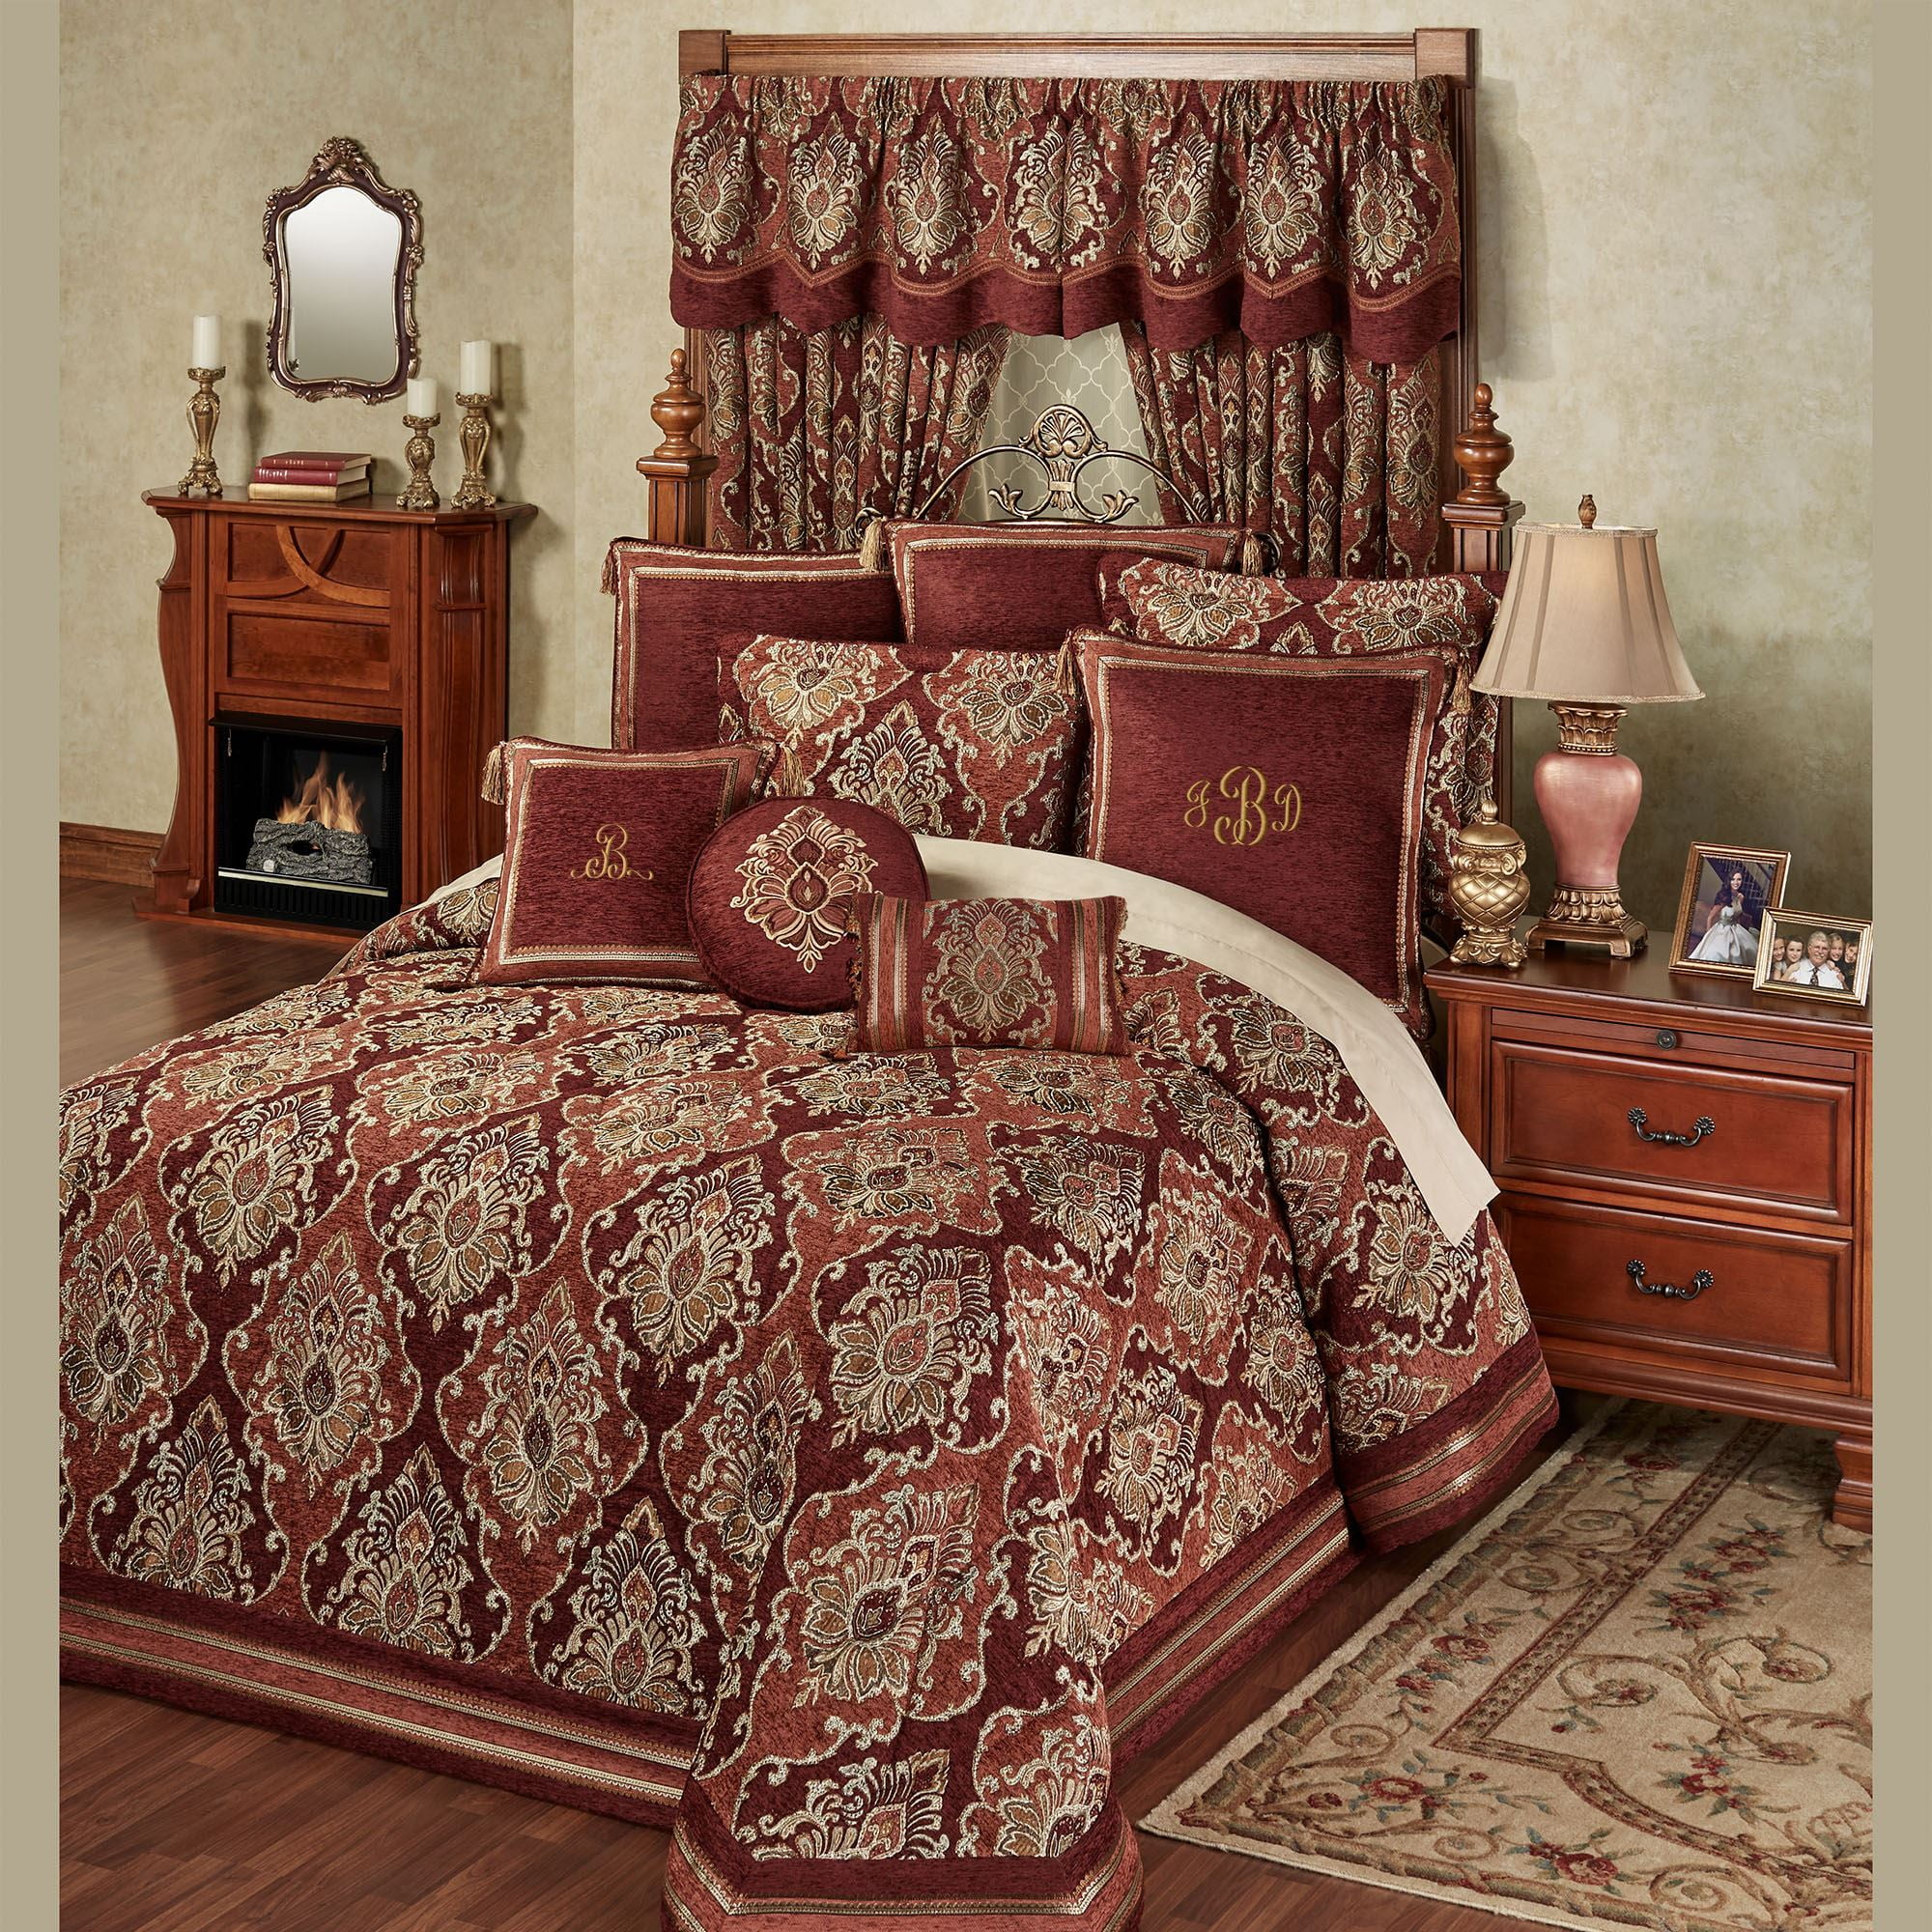 Quilted Victorian - for - Royal Style Grande Aesthetic Decor Elegant - Bedding Bedspread - Chenille Burgundy Queen Grande Ravenna Color Bedspread Jacquard